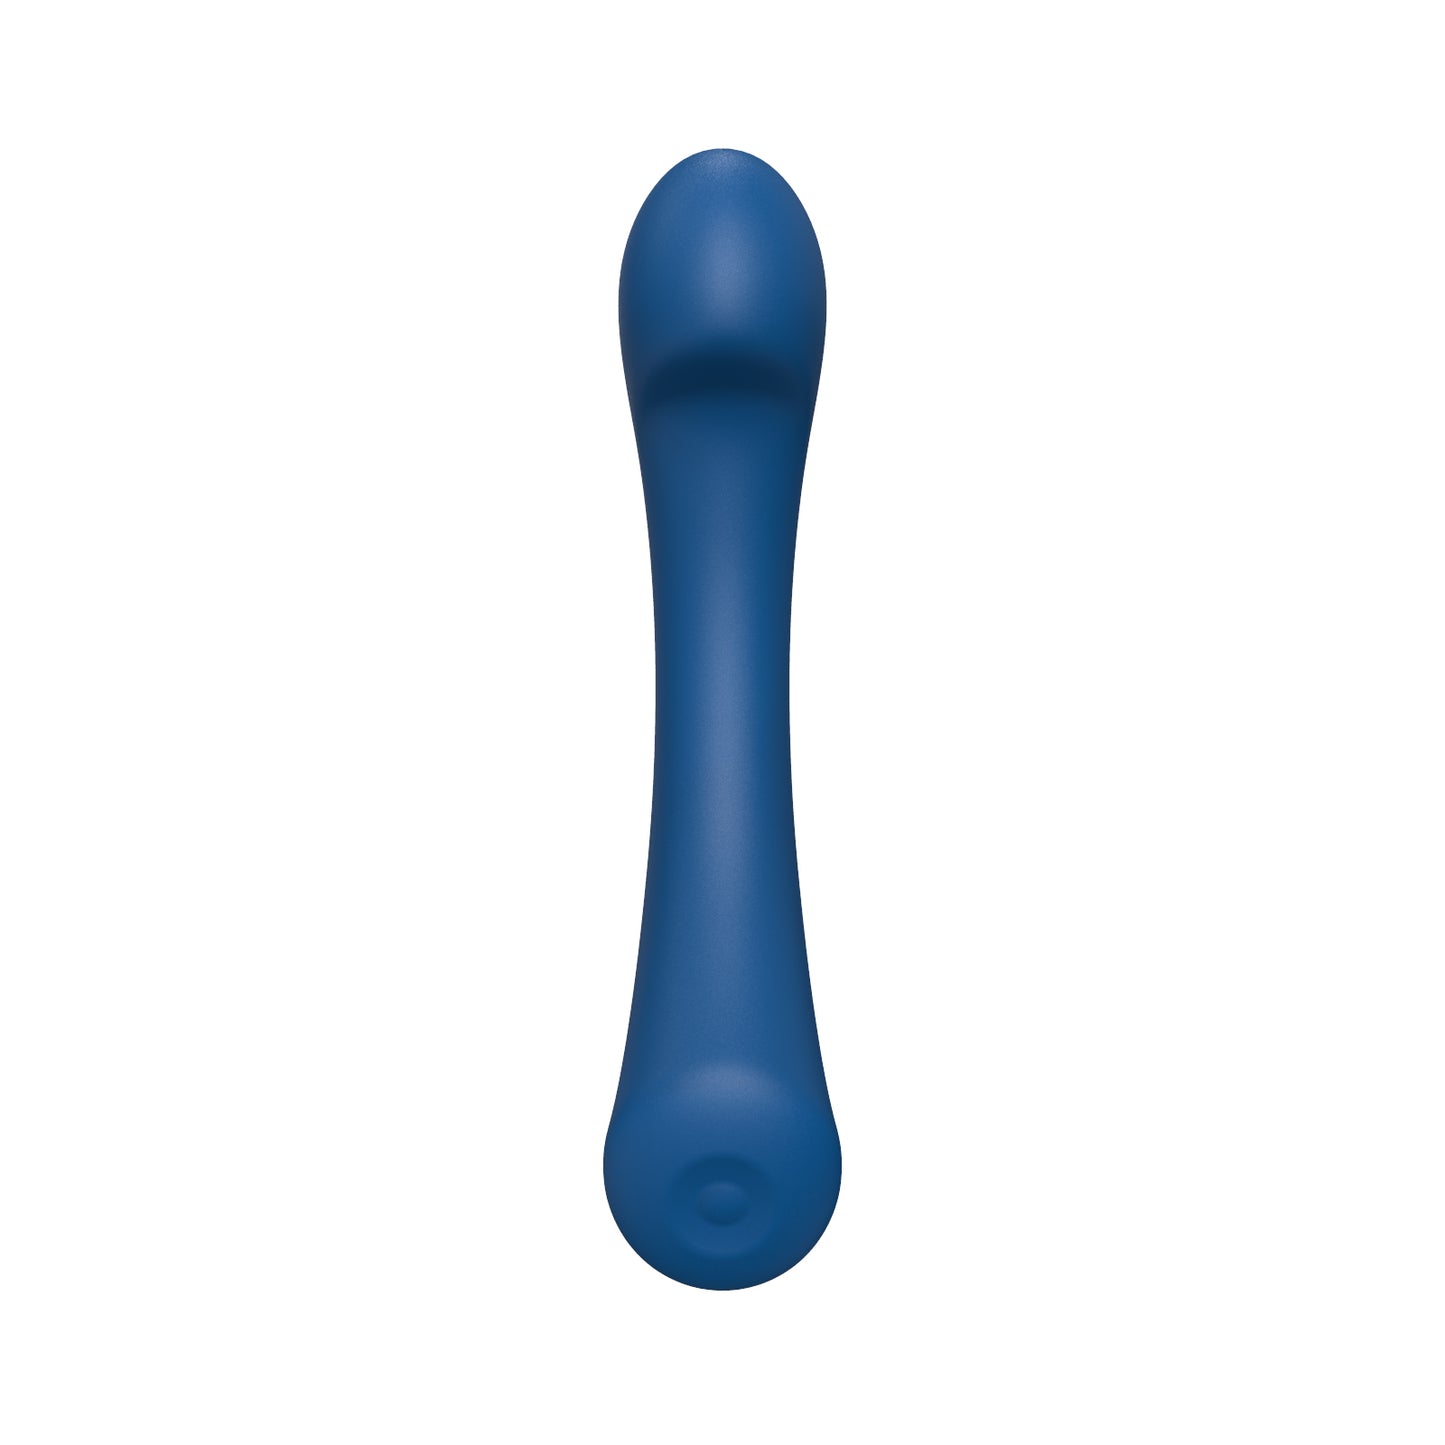 Vibrador de doble cabeza multifrecuencia silencioso impermeable líquido completo de silicona juguetes sexuales femeninos masajeador de juguete para adultos